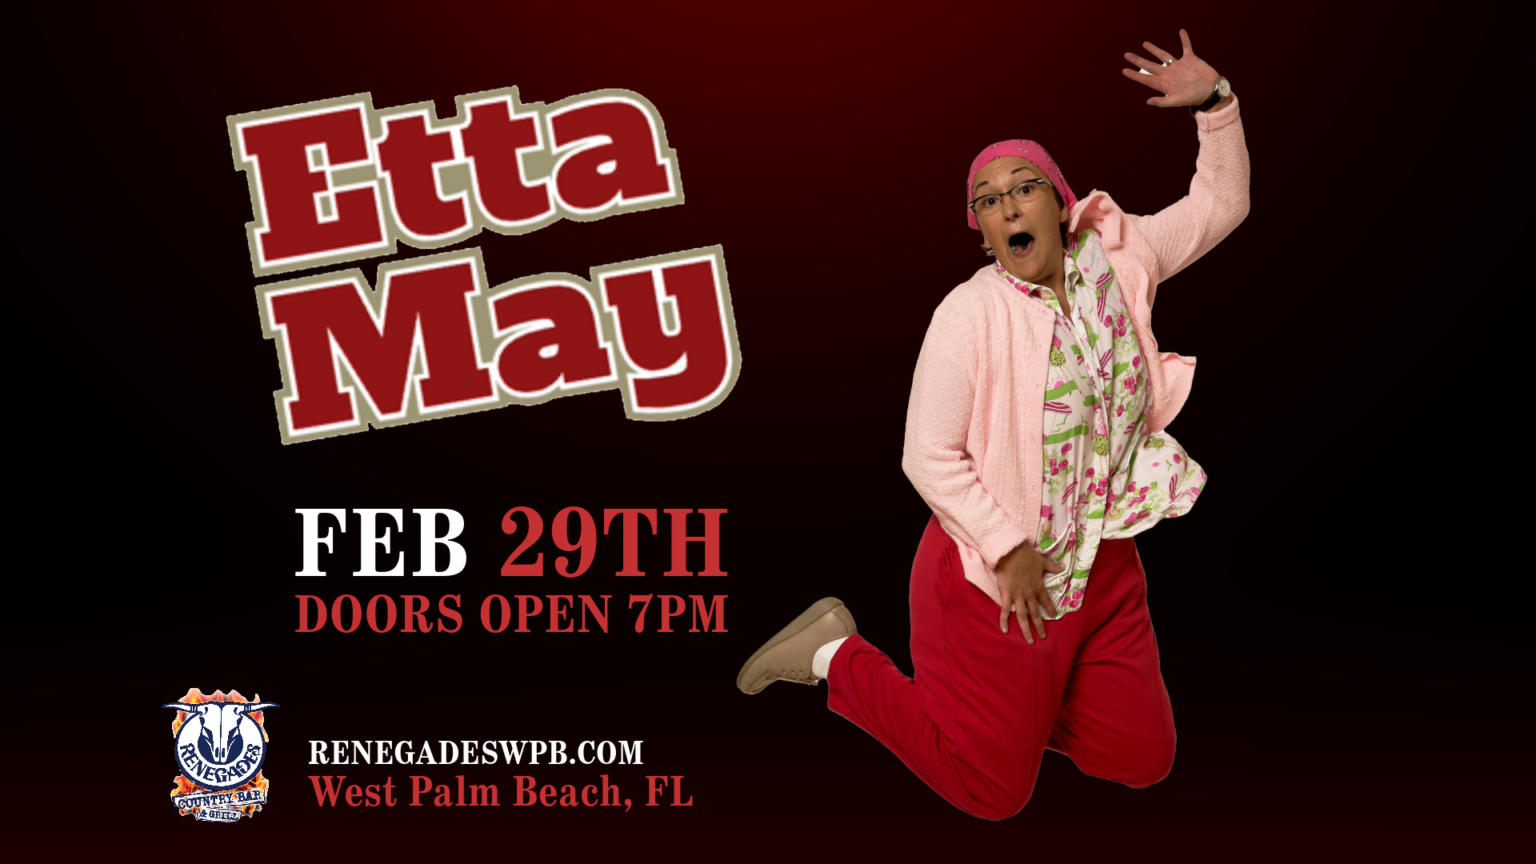 Etta May - West Palm Beach